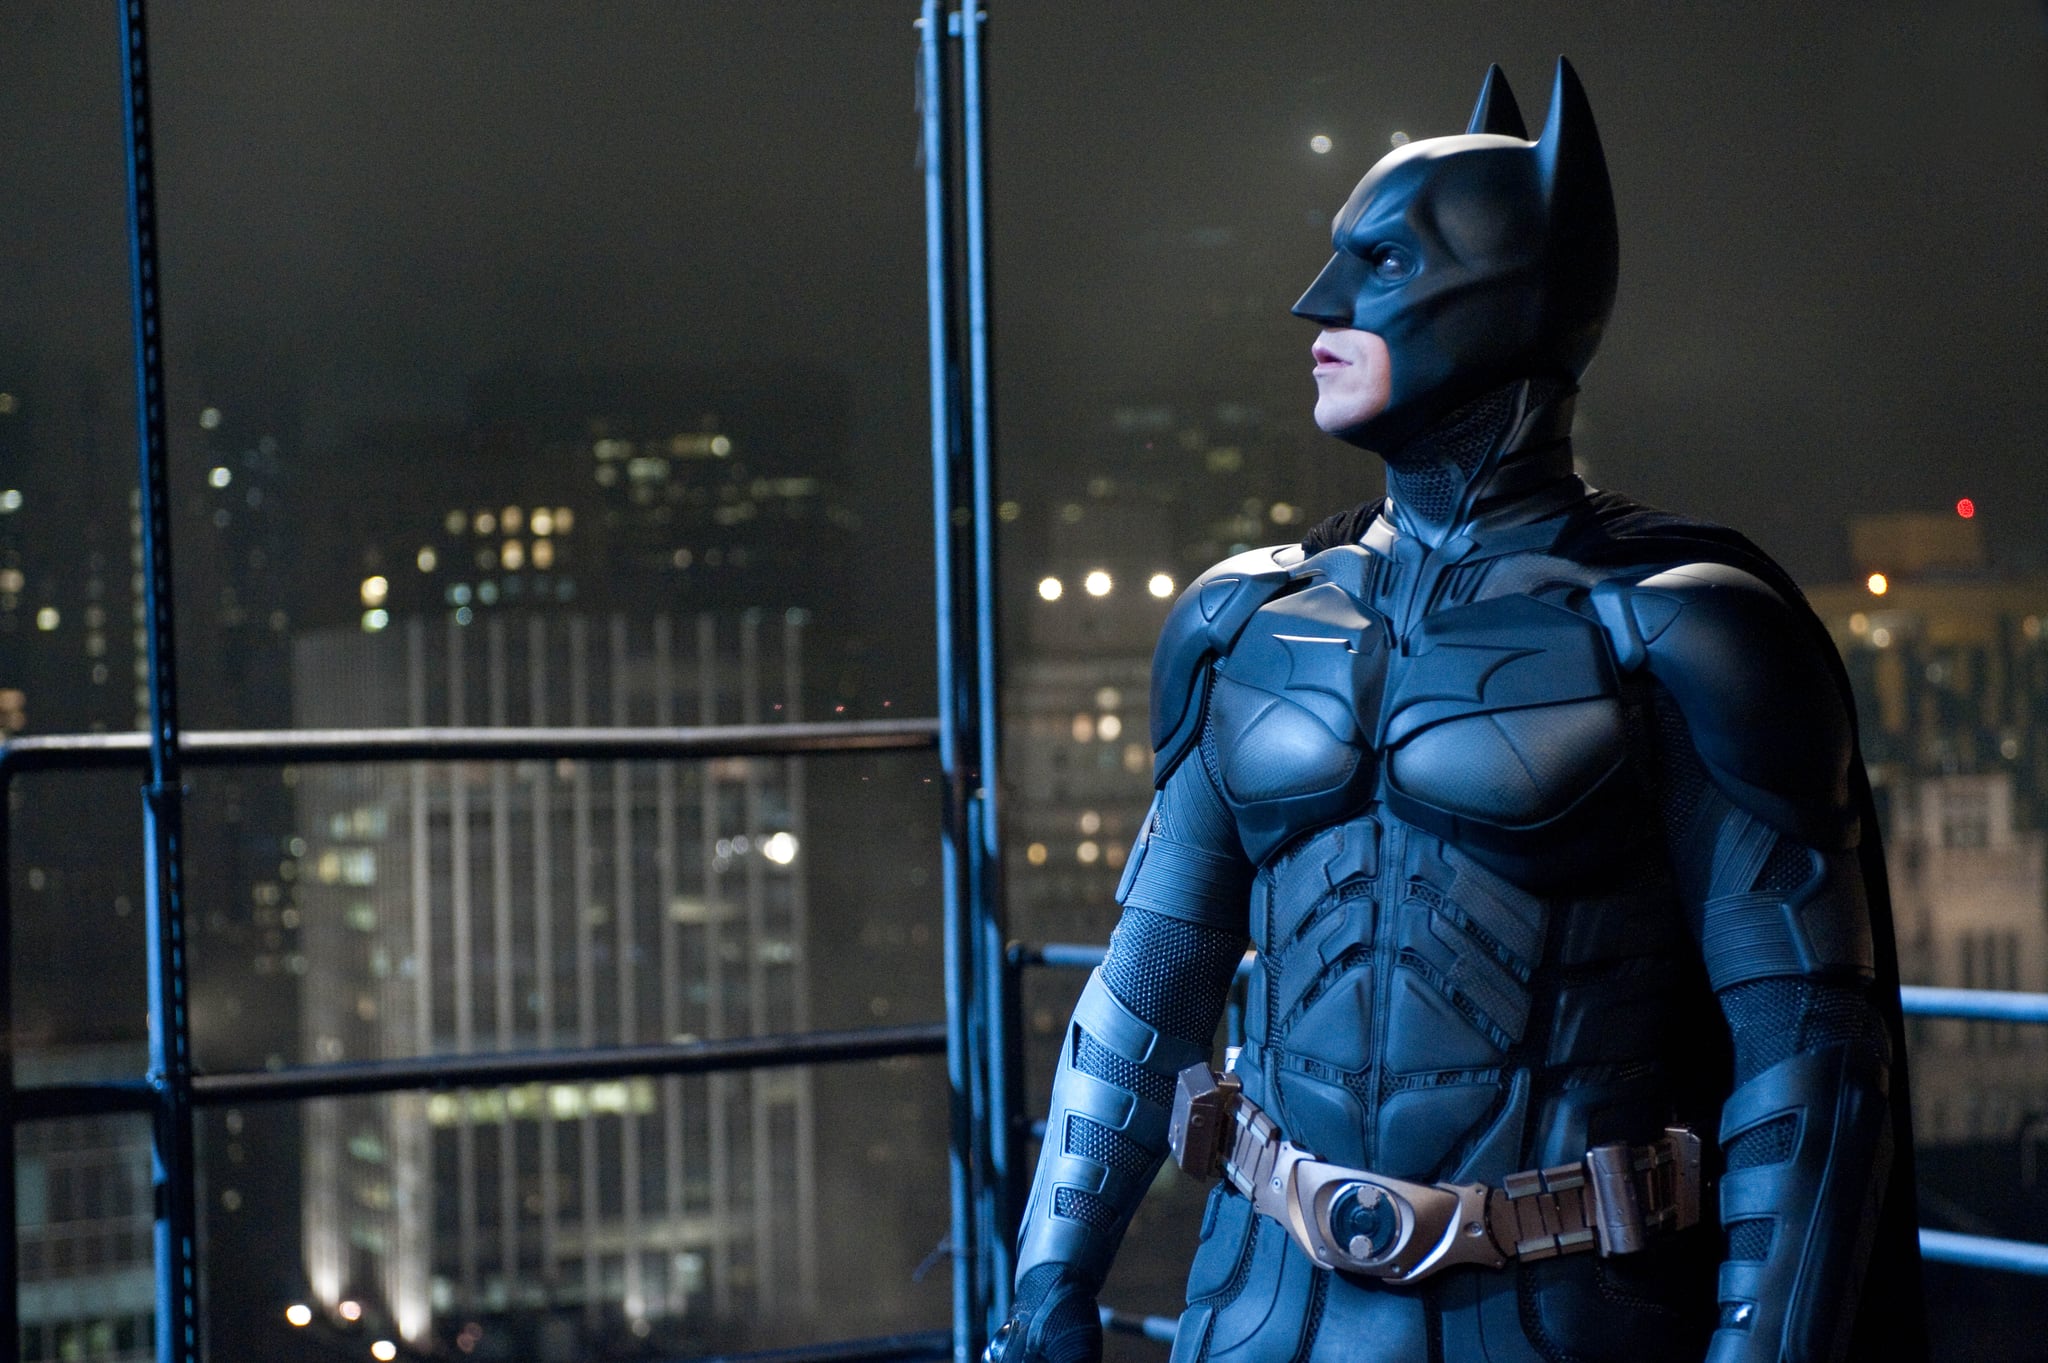 Batman From The Dark Knight | 500+ Pop Culture Halloween Costume Ideas That  Will Make 2019 the Best Halloween Yet | POPSUGAR Entertainment Photo 92